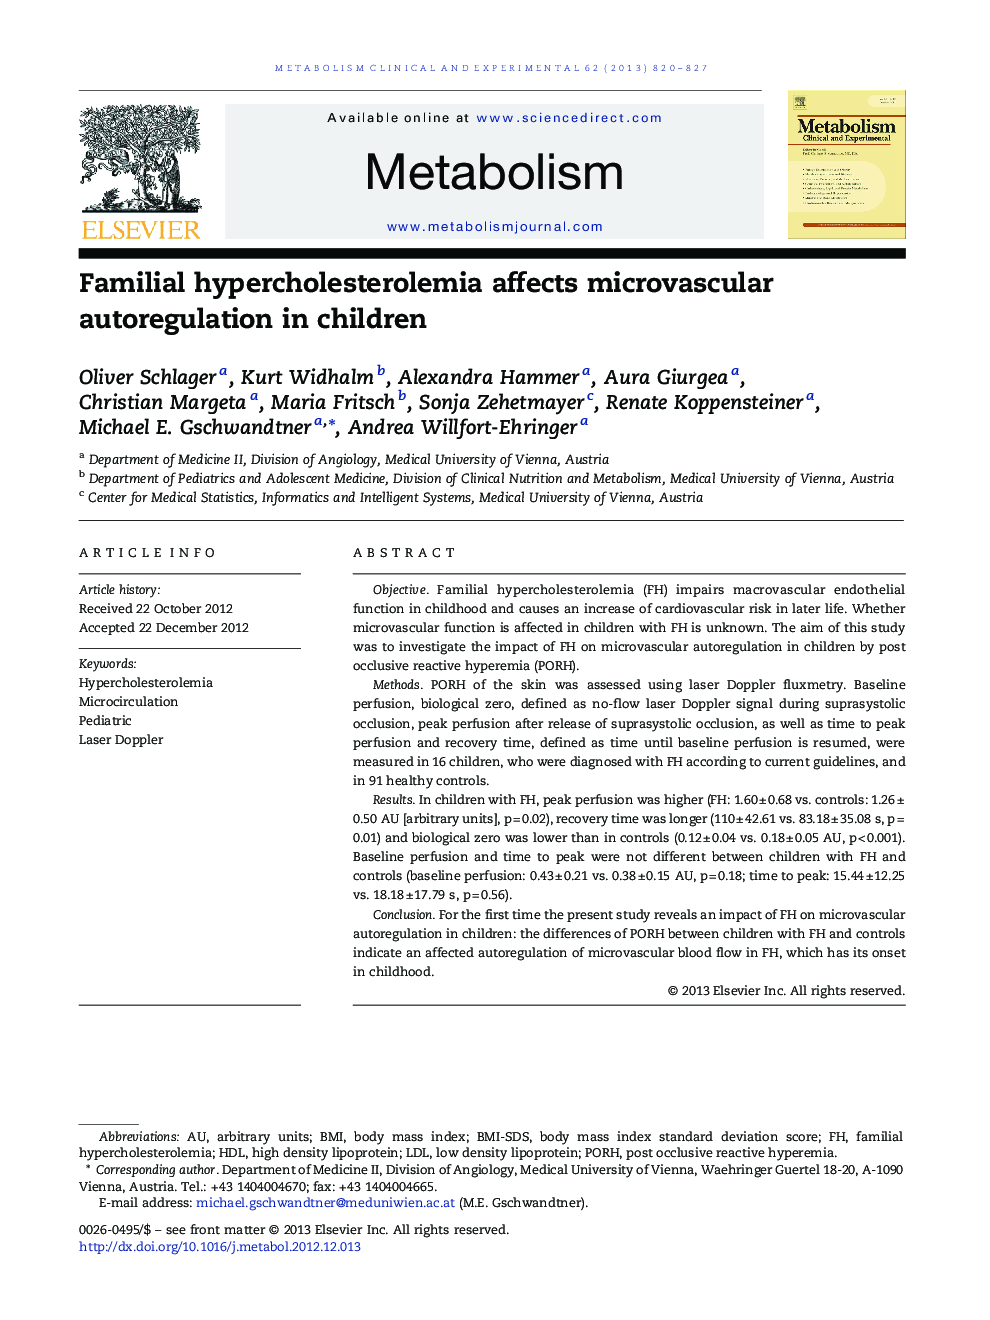 Familial hypercholesterolemia affects microvascular autoregulation in children